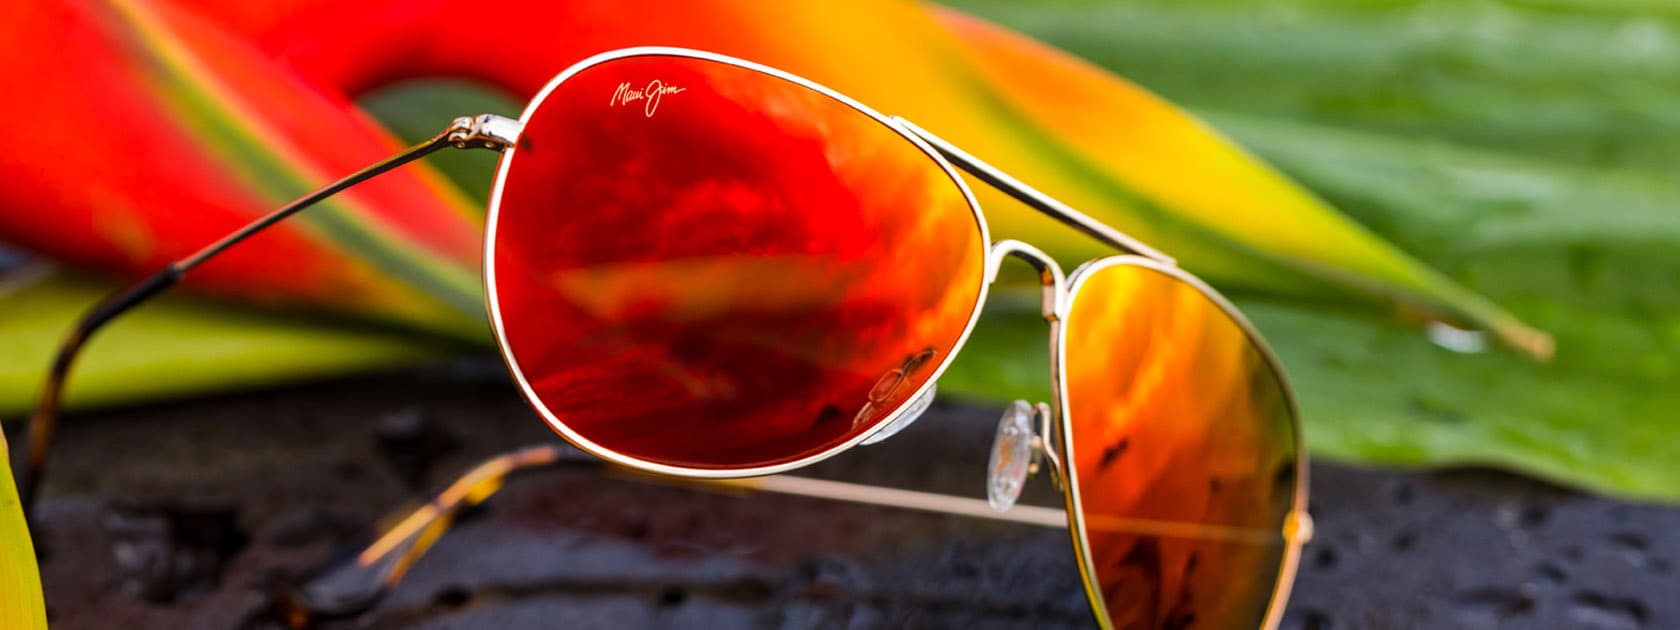 Polarized Bifocal Vision Reader Reading Glasses Sunglasses Smoke or Amber  Lens